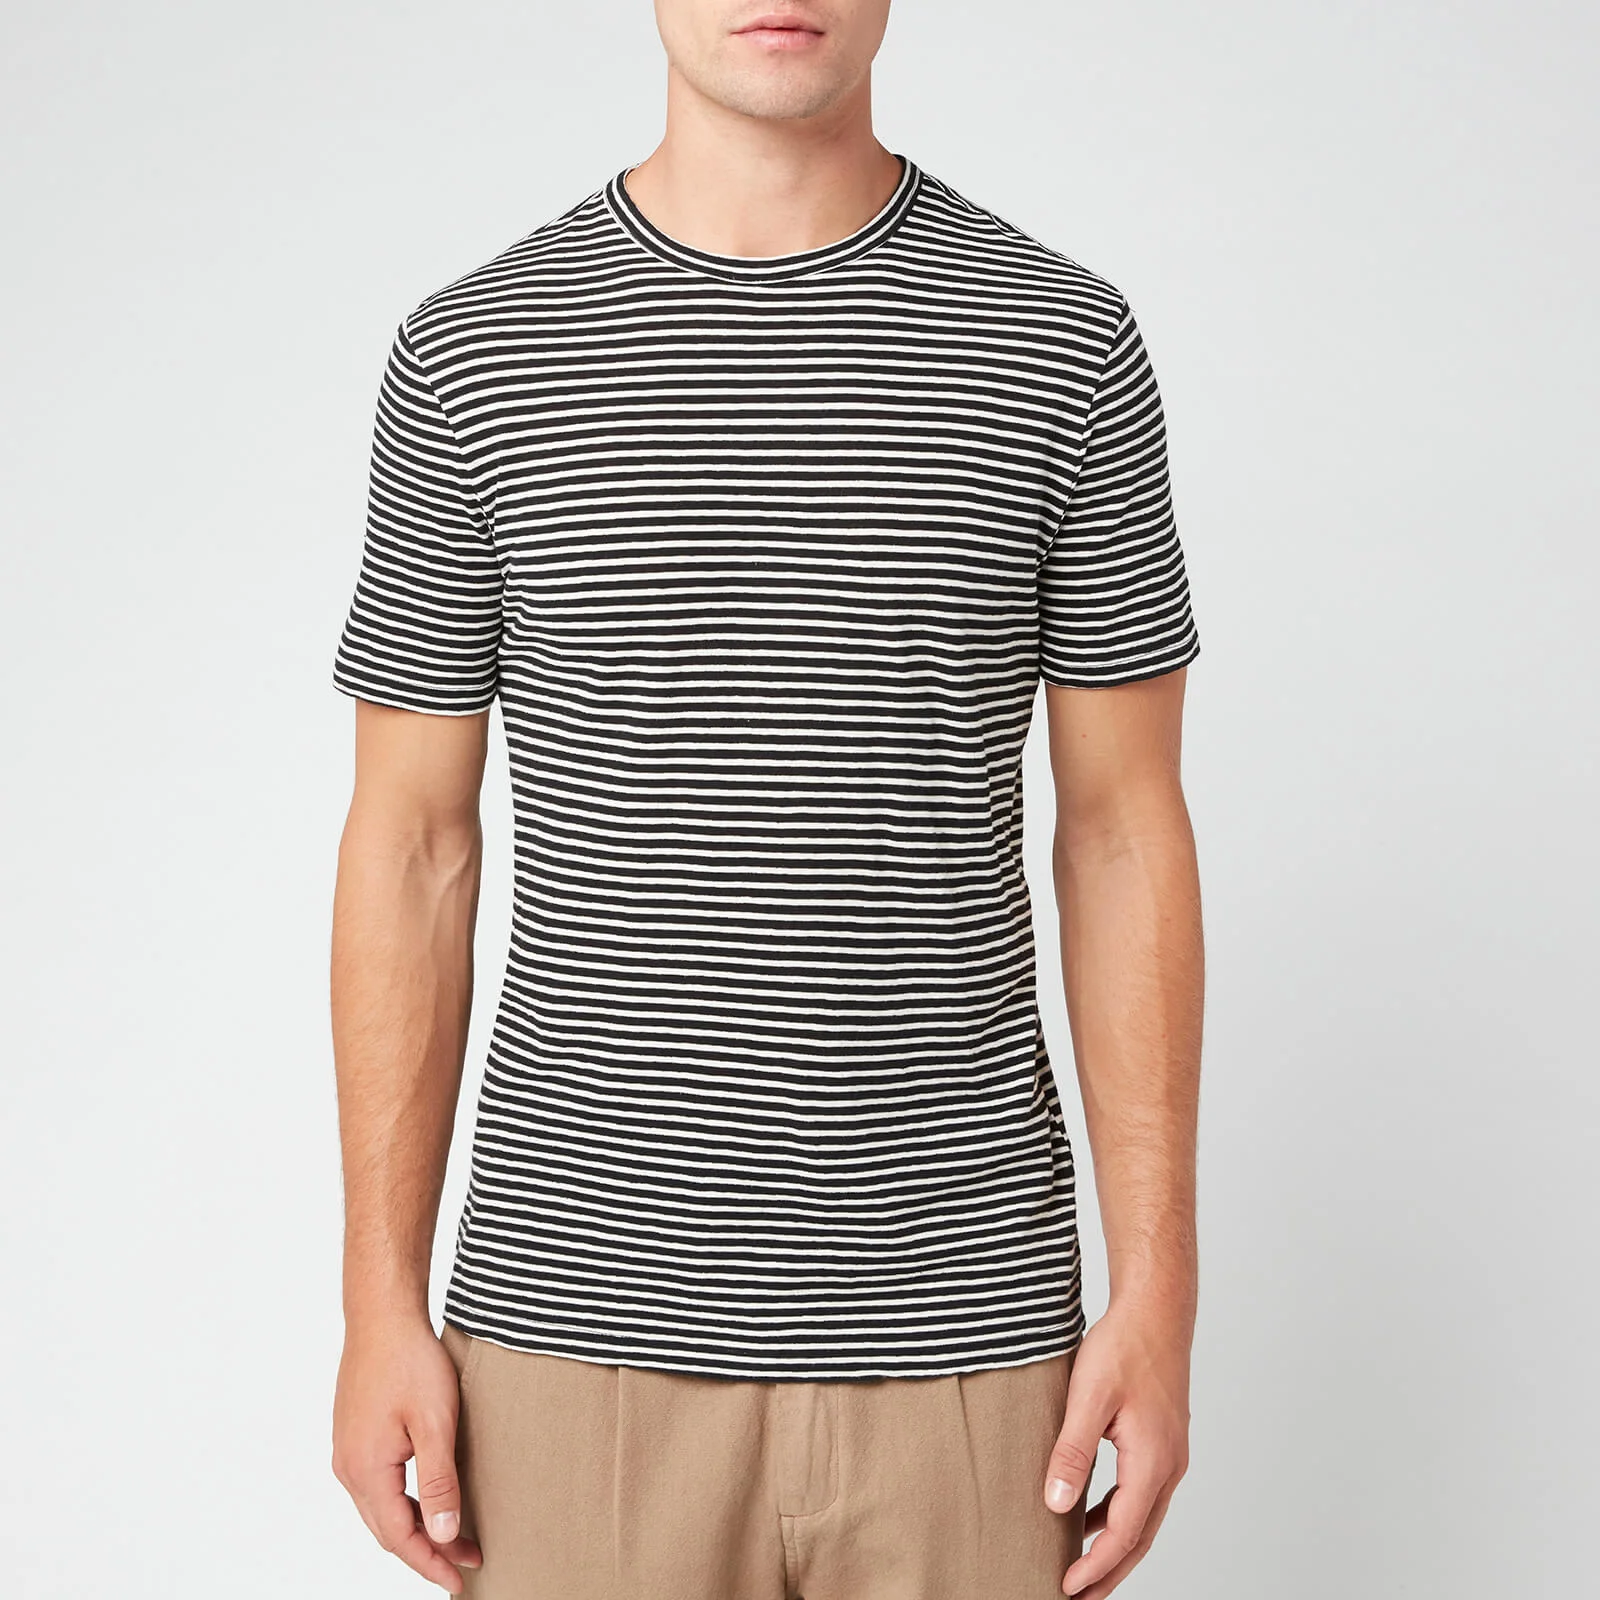 Officine Générale Men's Japanese Stripe Short Sleeve T-Shirt - Black/White Image 1